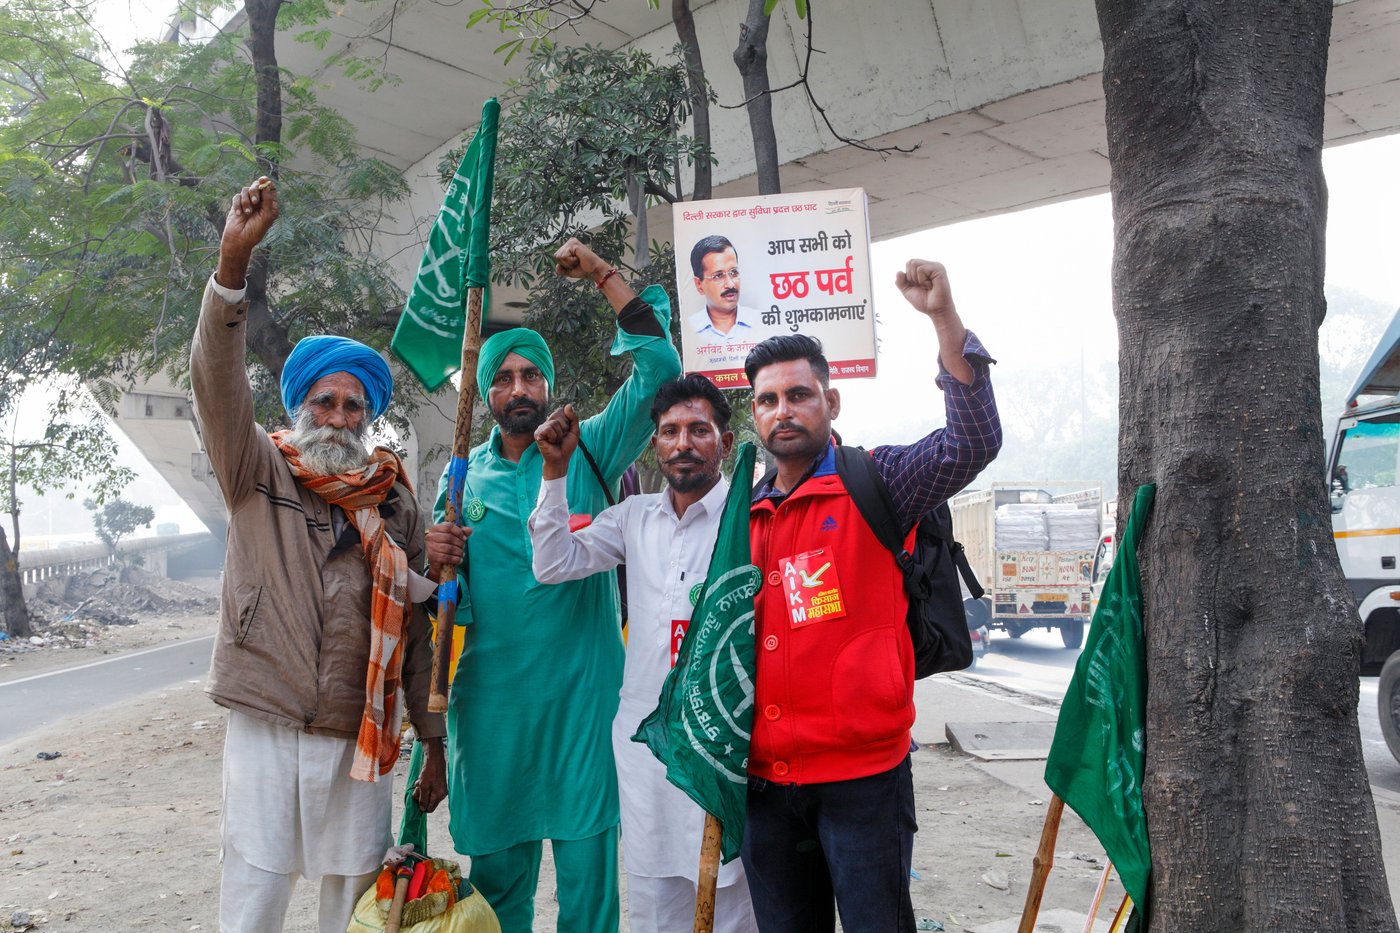 Sikh farmers stopping to rest on their march from Majnu ka Tila to Ramlila Maidan on November 29th, 2018. Jagjit Singh is in the green kurta pyjama